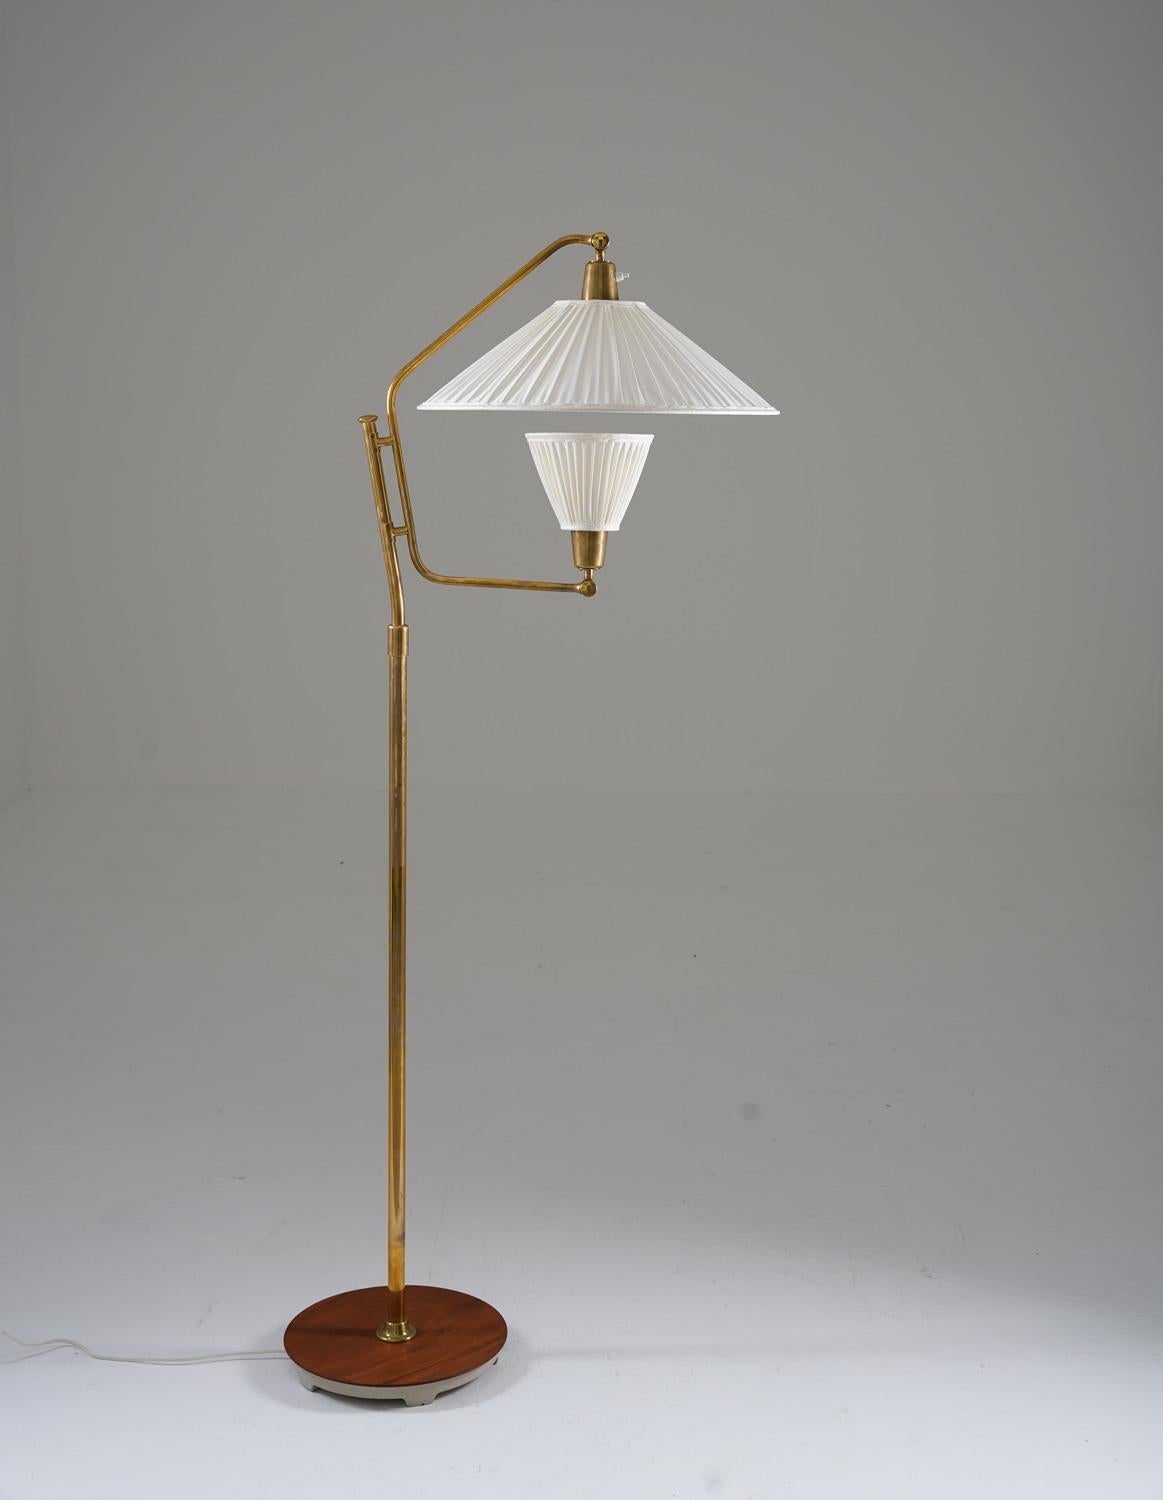 Scandinavian midcentury floor lamp by Bertil Brisborg for NK, Sweden.
This rare model is made for Nordiska Kompaniets 